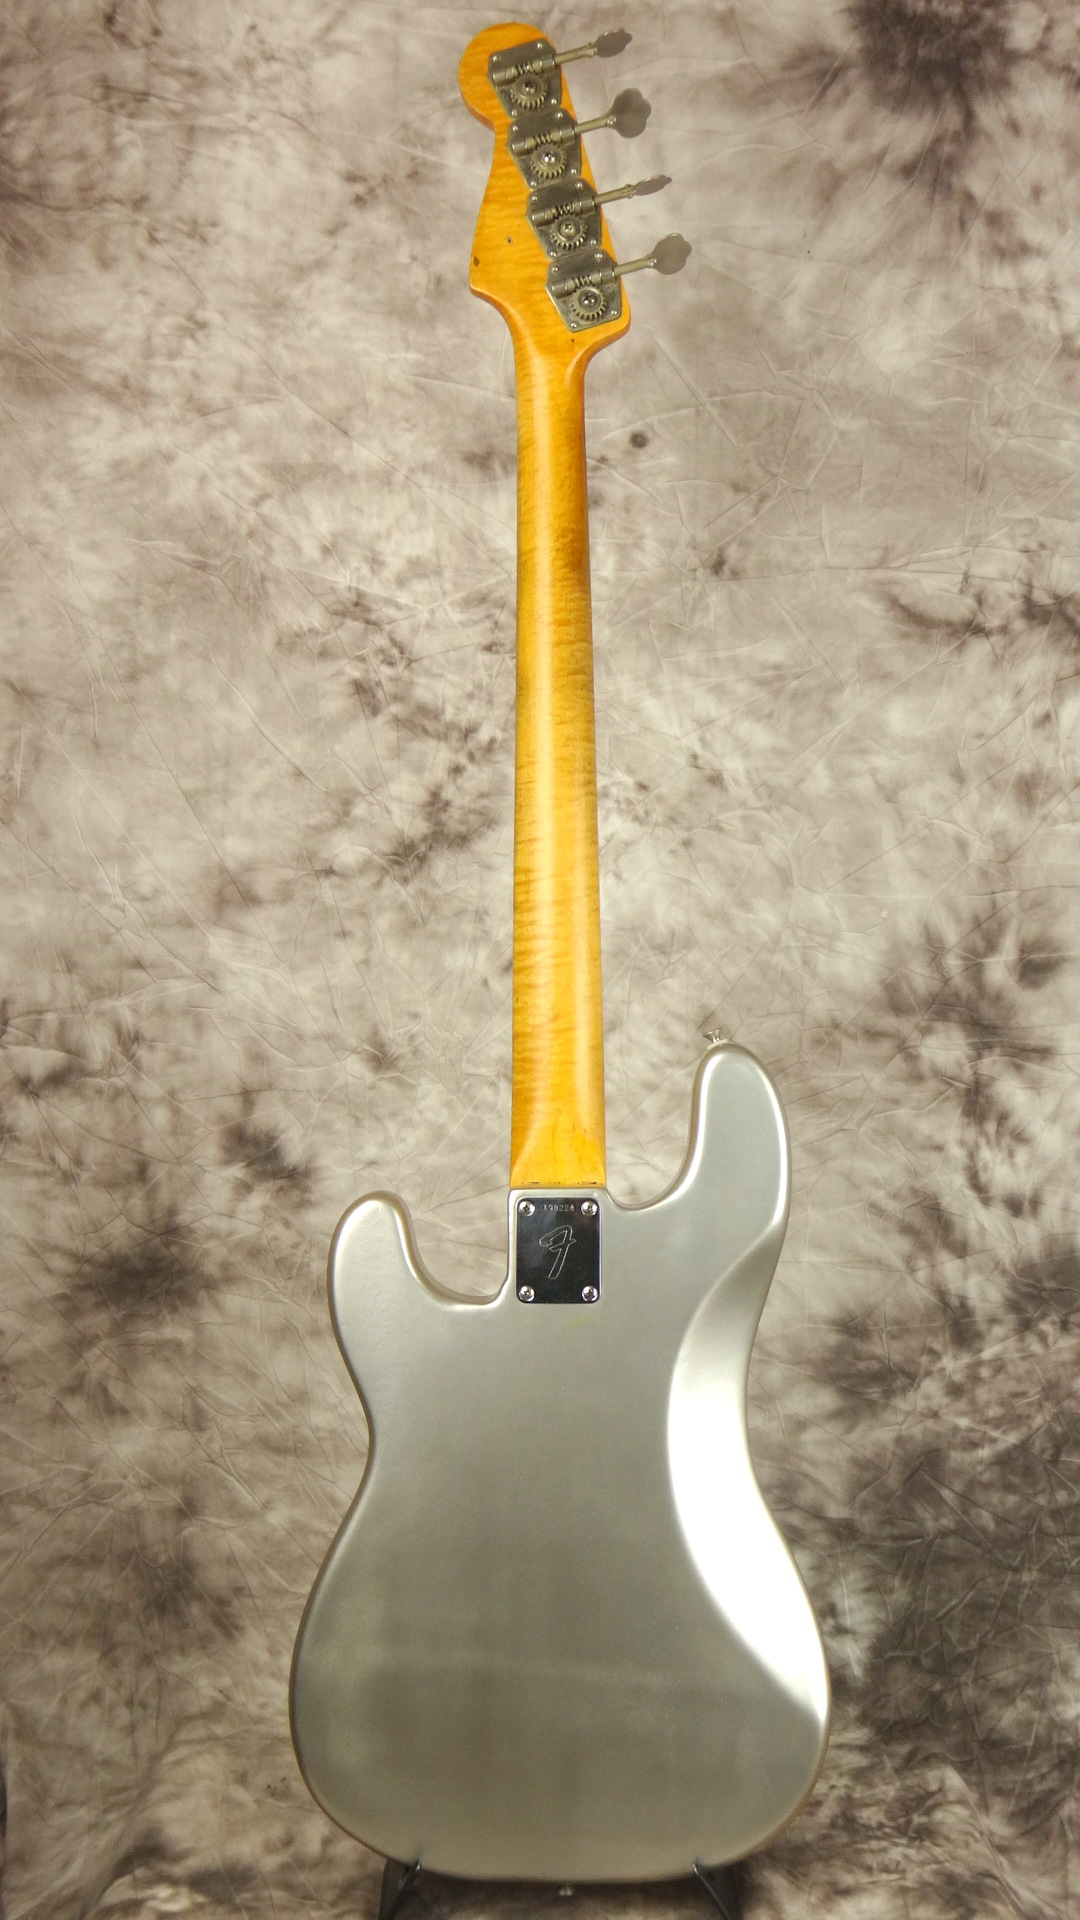 Fedner_precision-Bass-1968-refinished-shoreline-gold-004.JPG